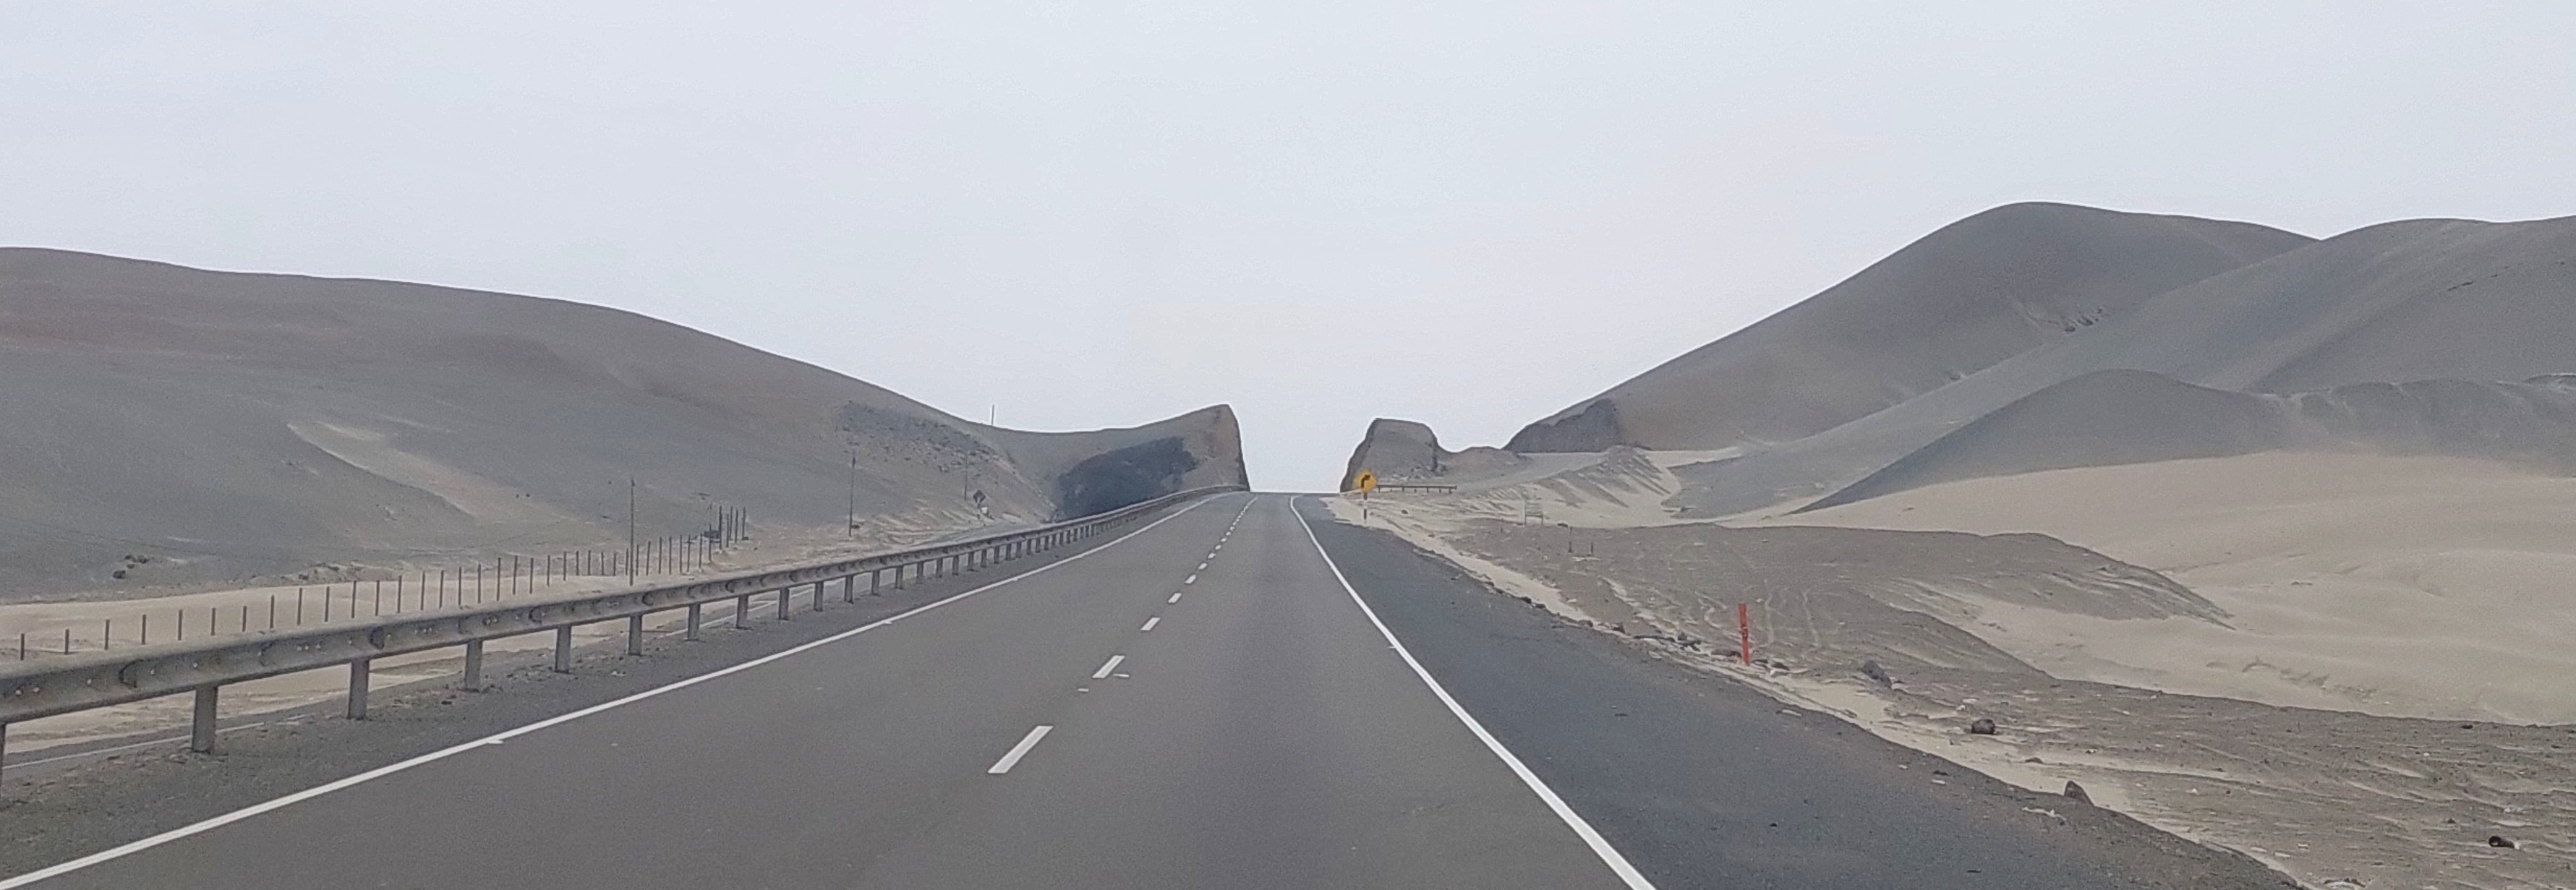 Ruta Cañete - Nuevo Chimbote, Perú Norte, paisaje de carretera